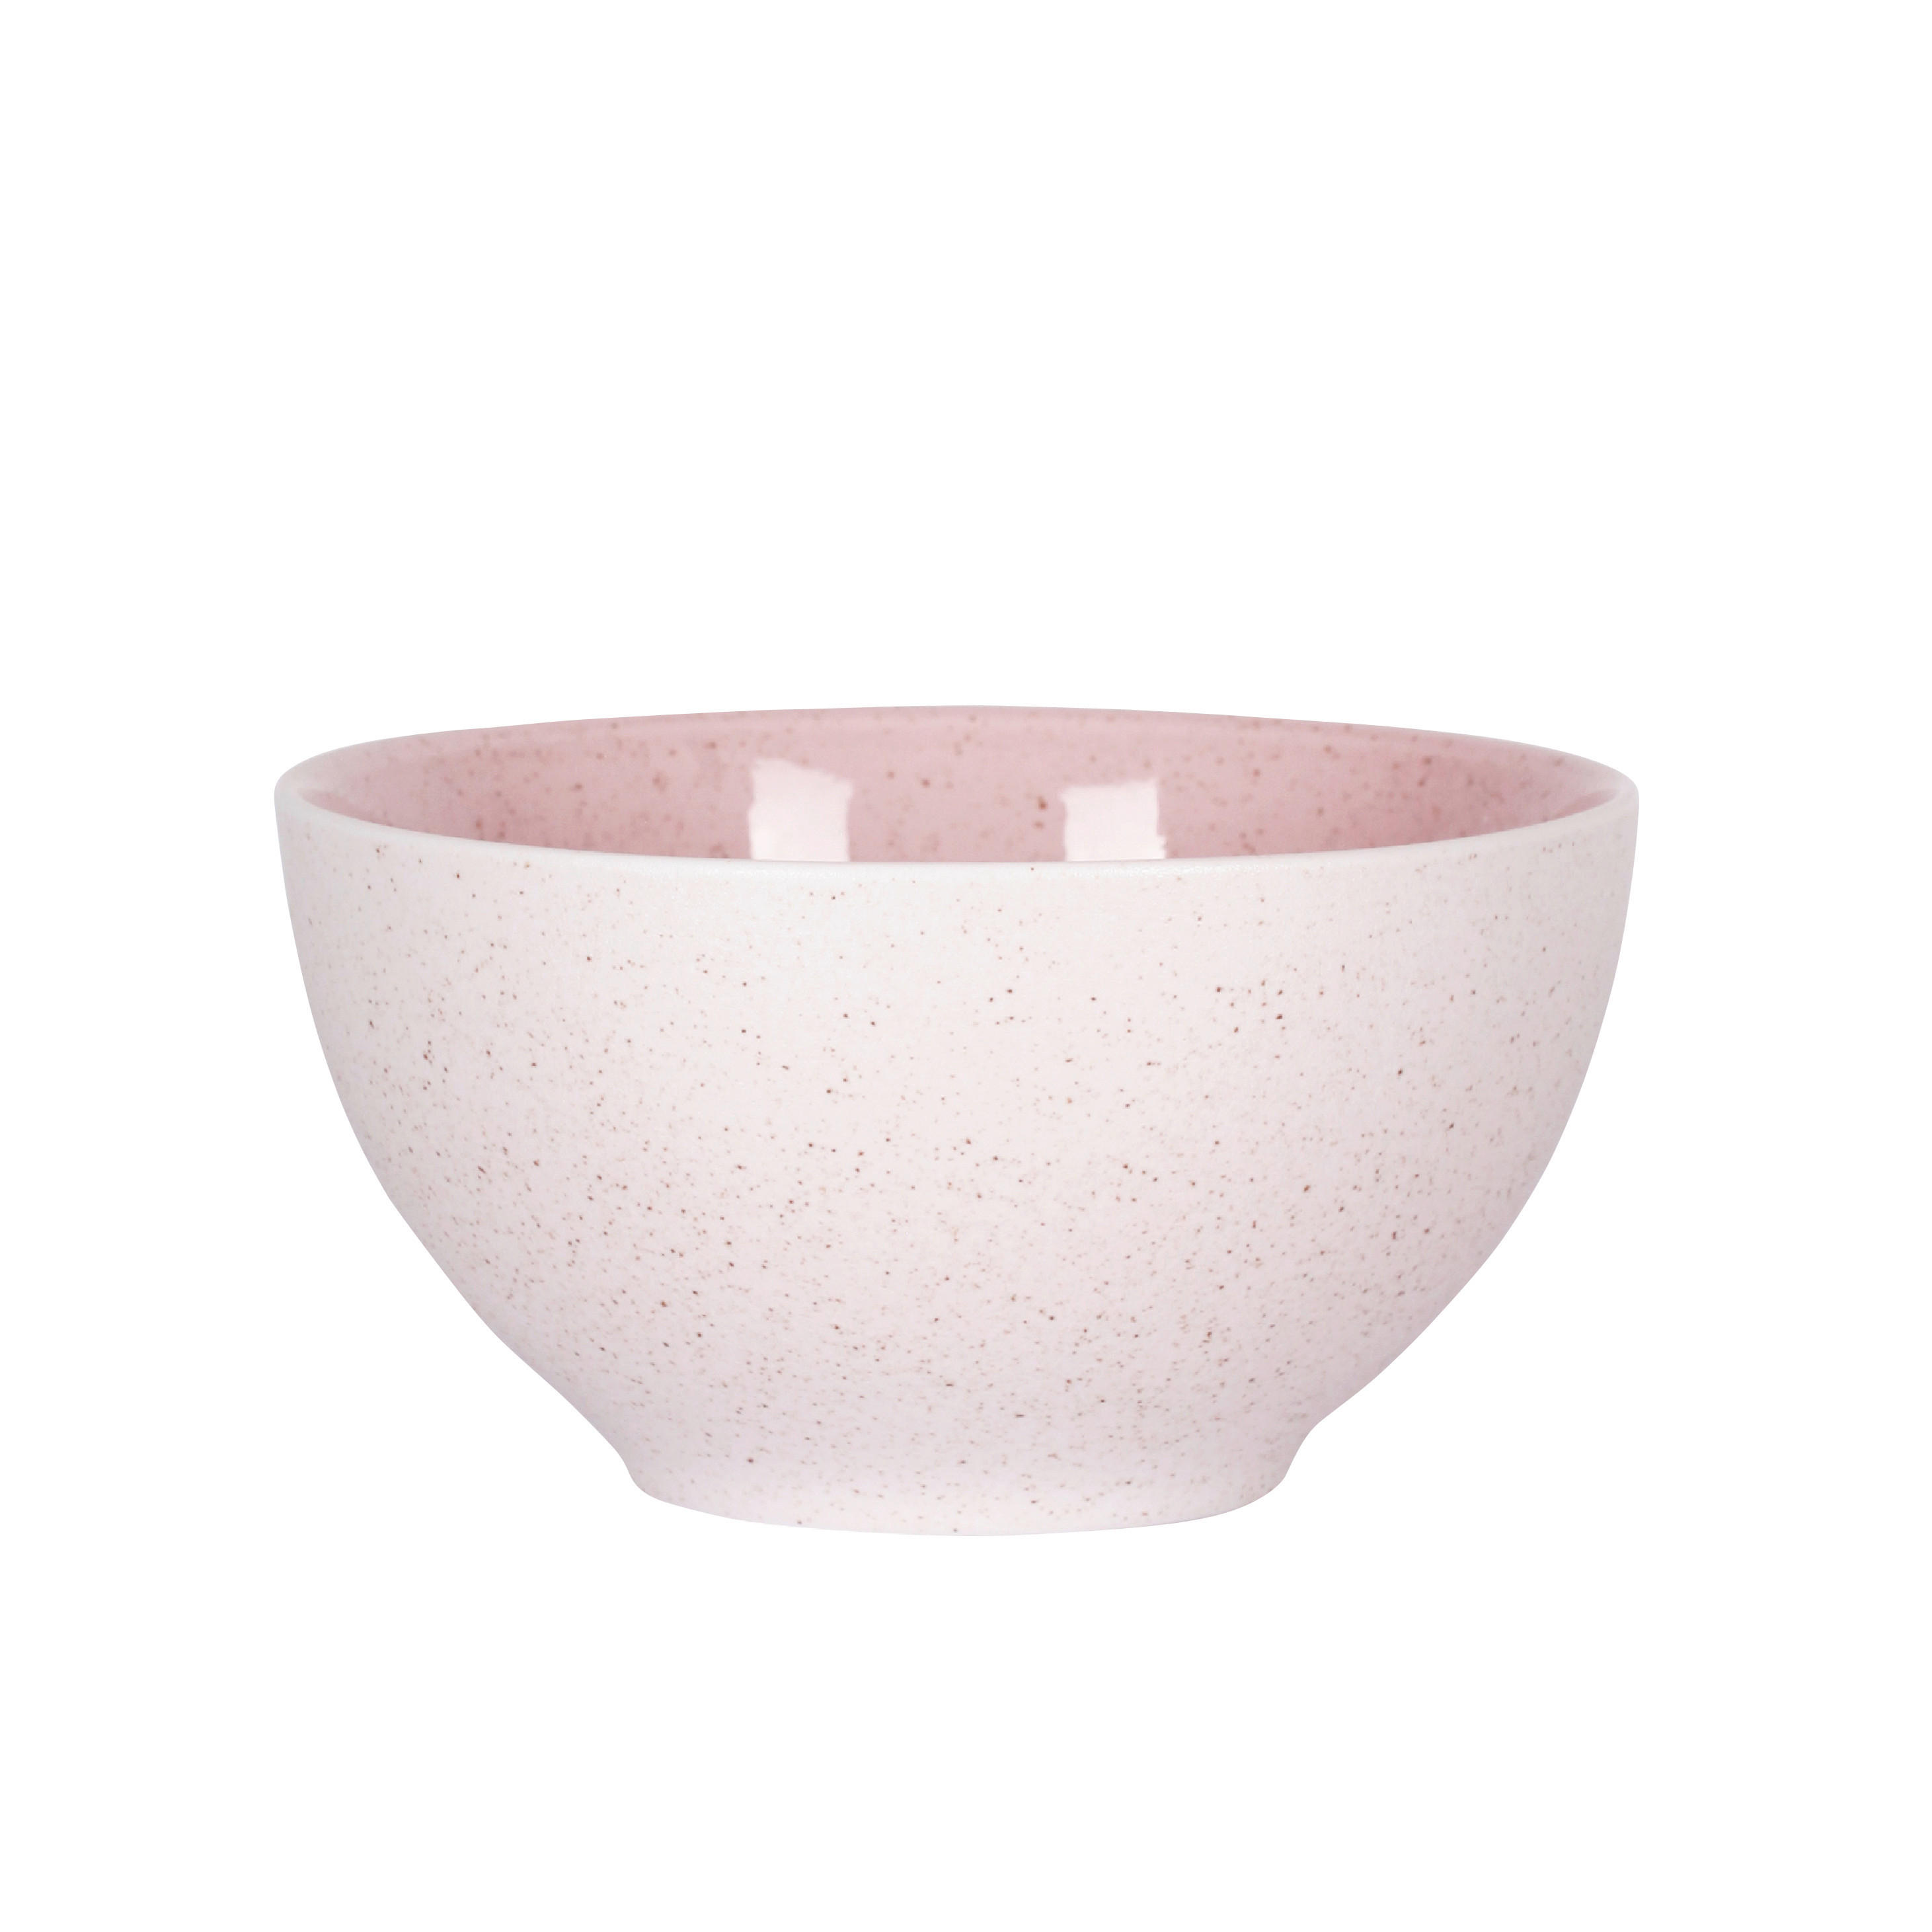 MISA NA ŠALÁT, porcelán, 23 cm - ružová, Design, keramika (23cm) - Novel